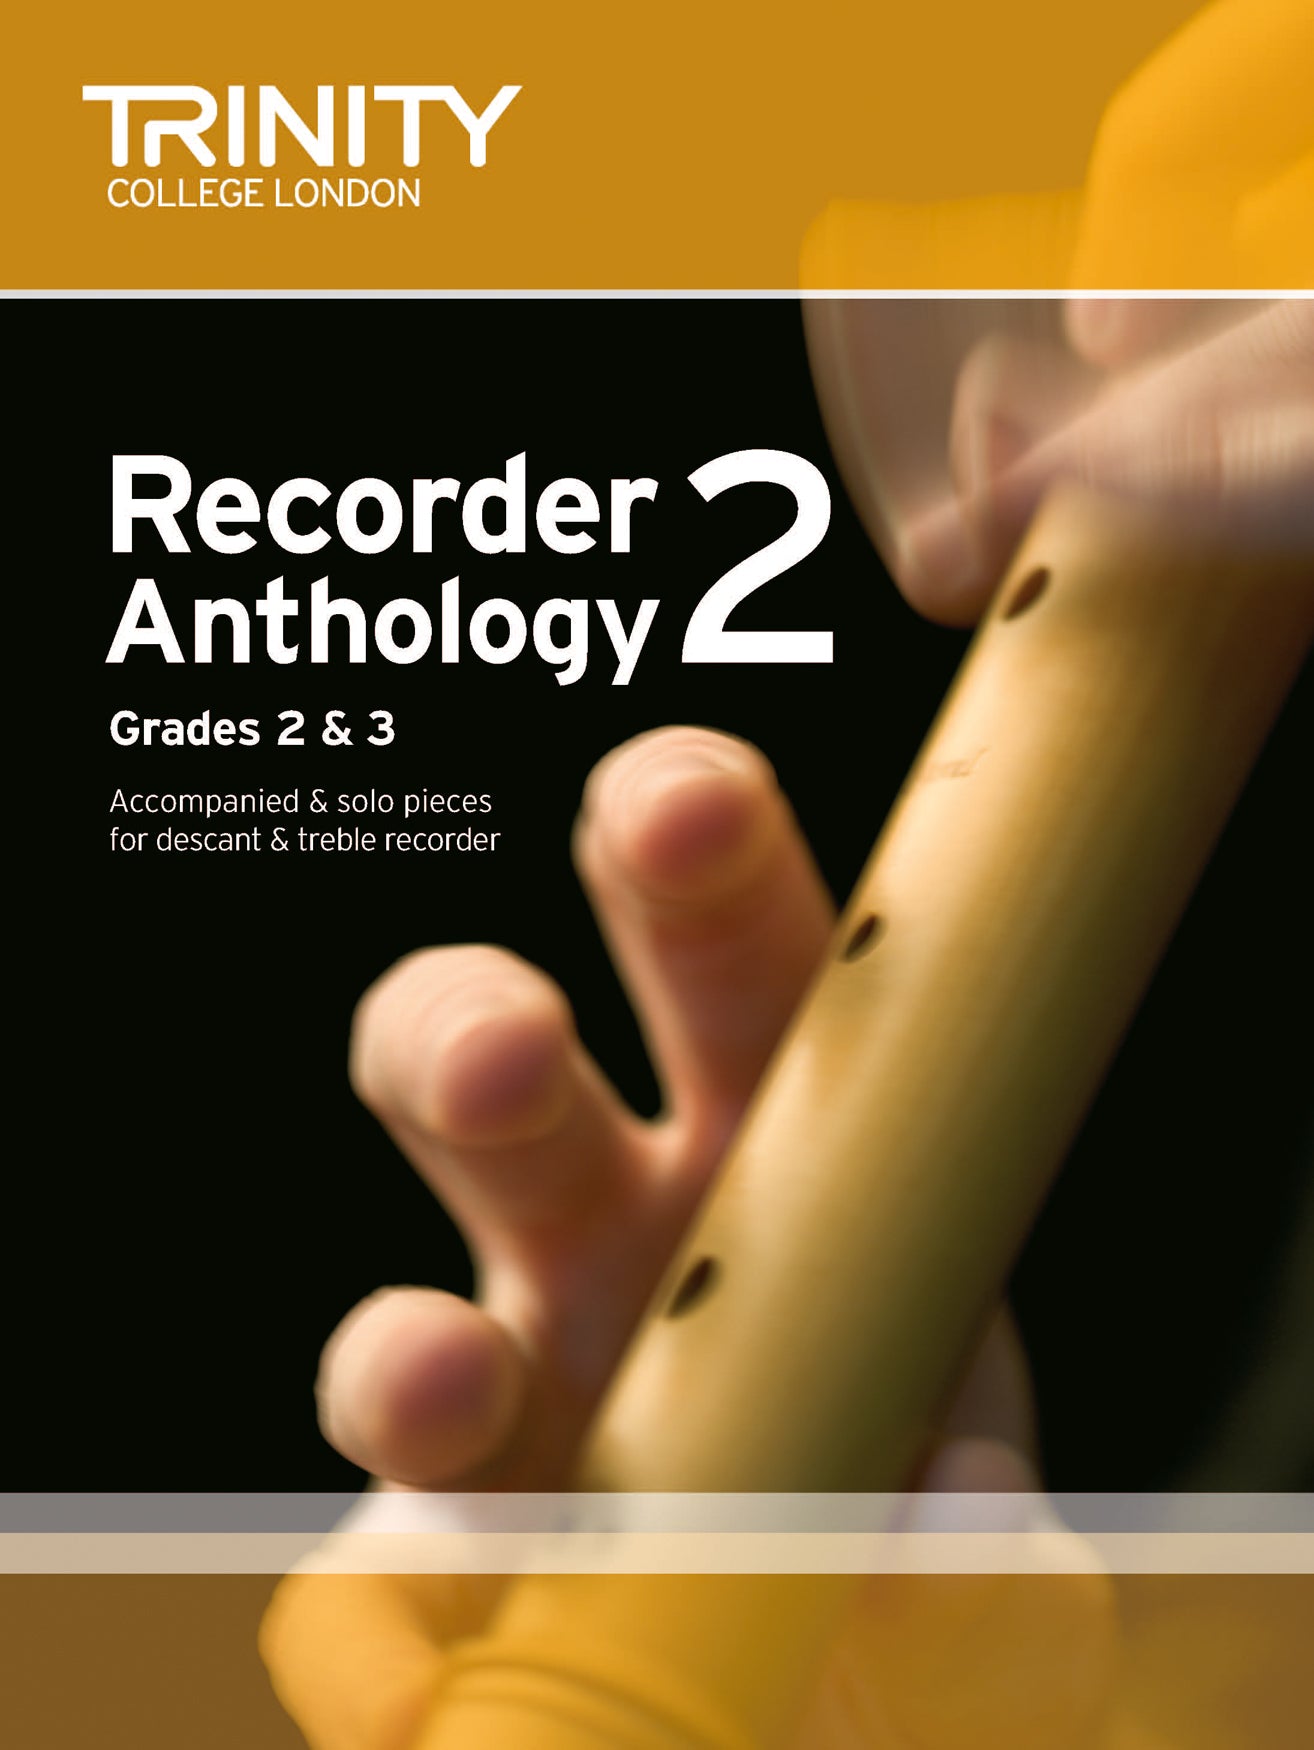 TCL Recorder Anthology 2 G2-3